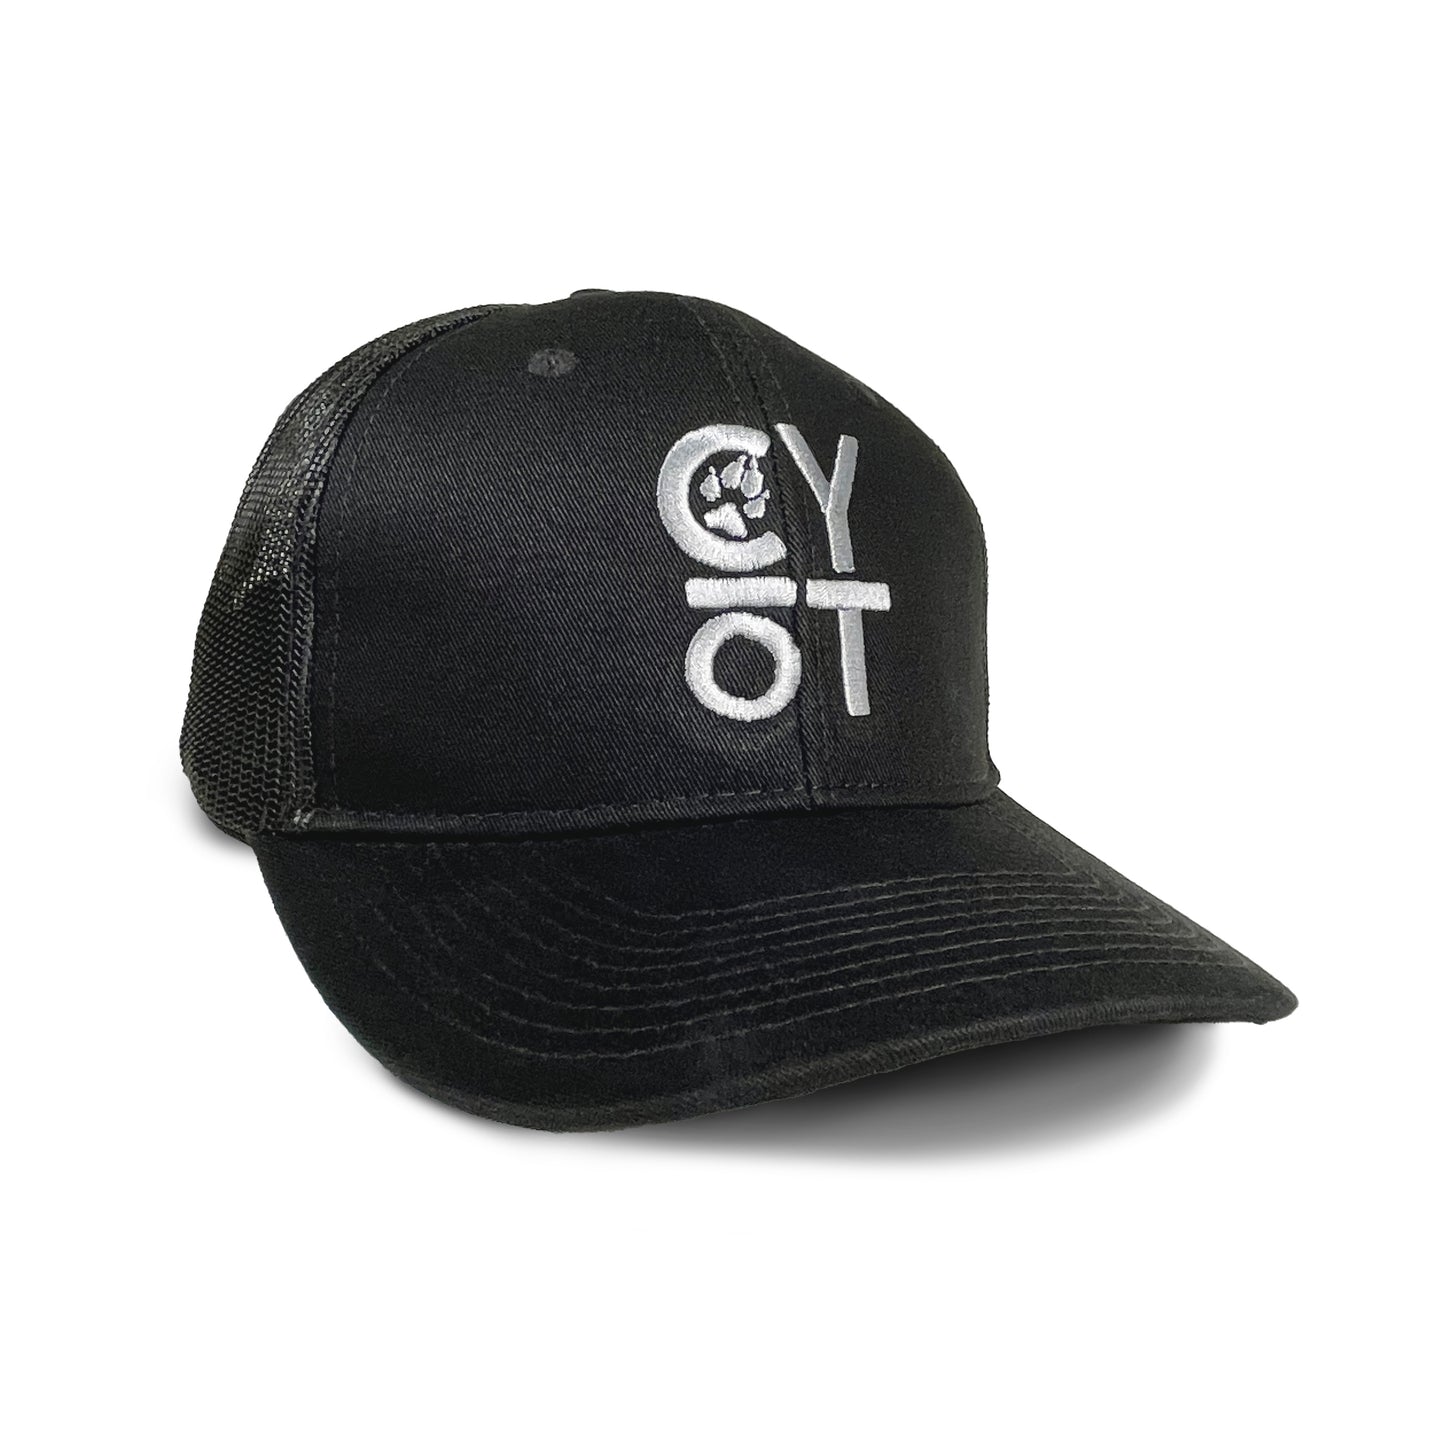 CYoT Ball Cap